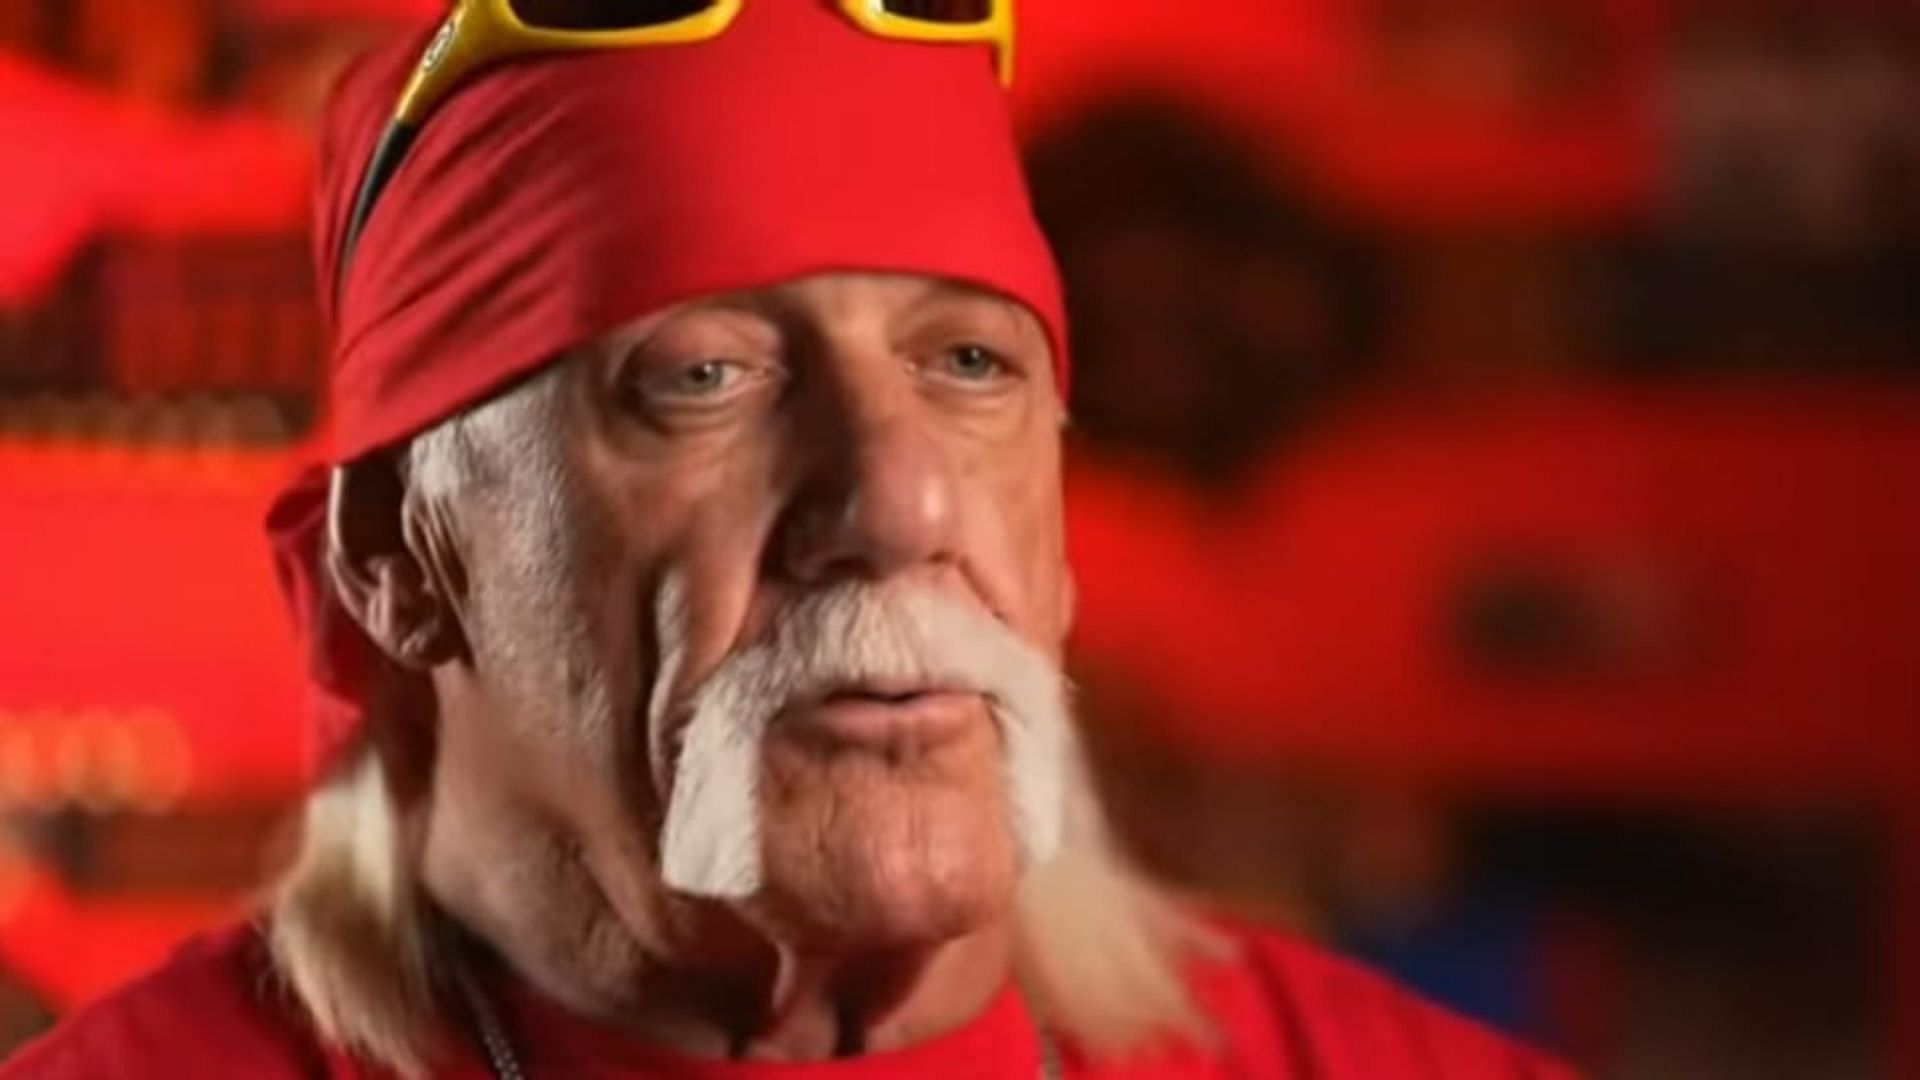 Hulk Hogan is one of the wrestling